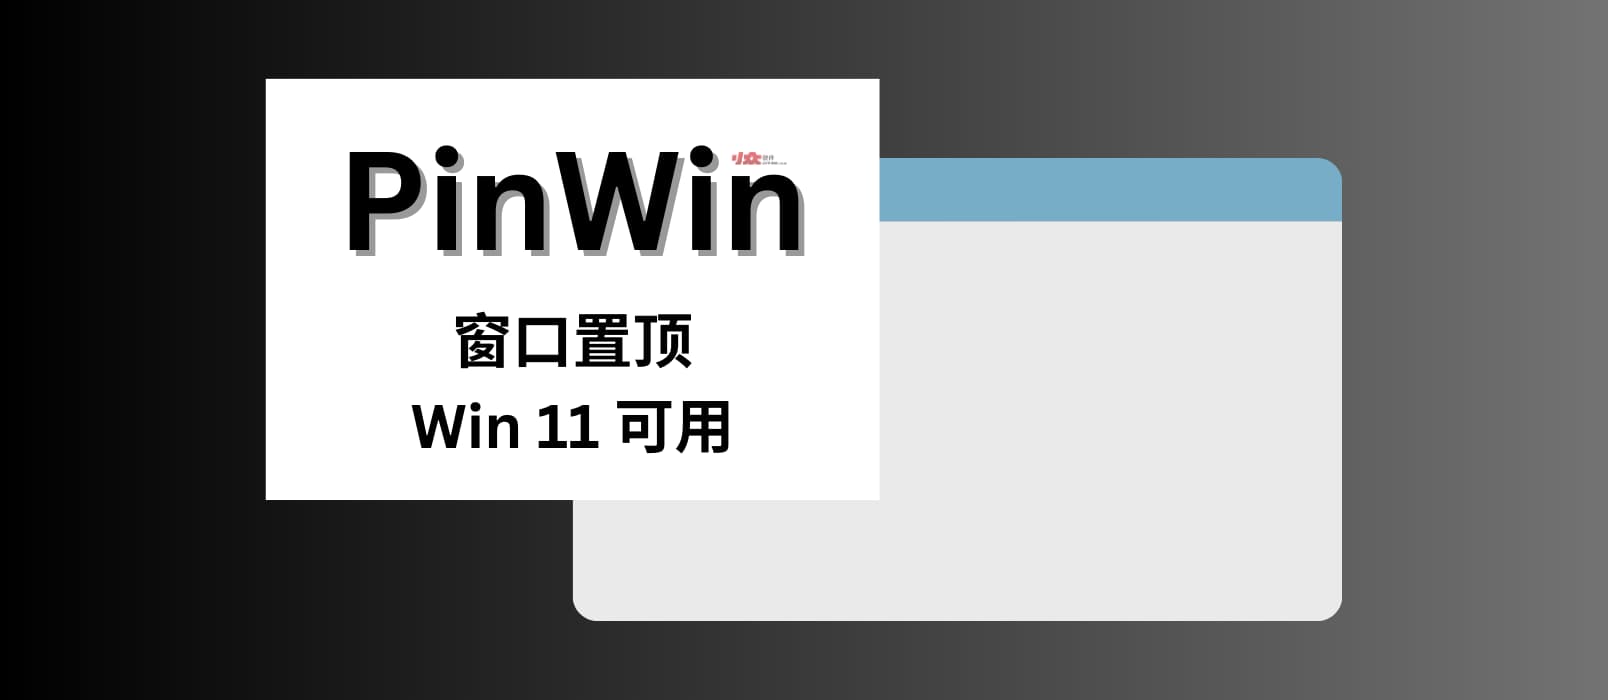 PinWin – Win 11 可用，置顶任何窗口